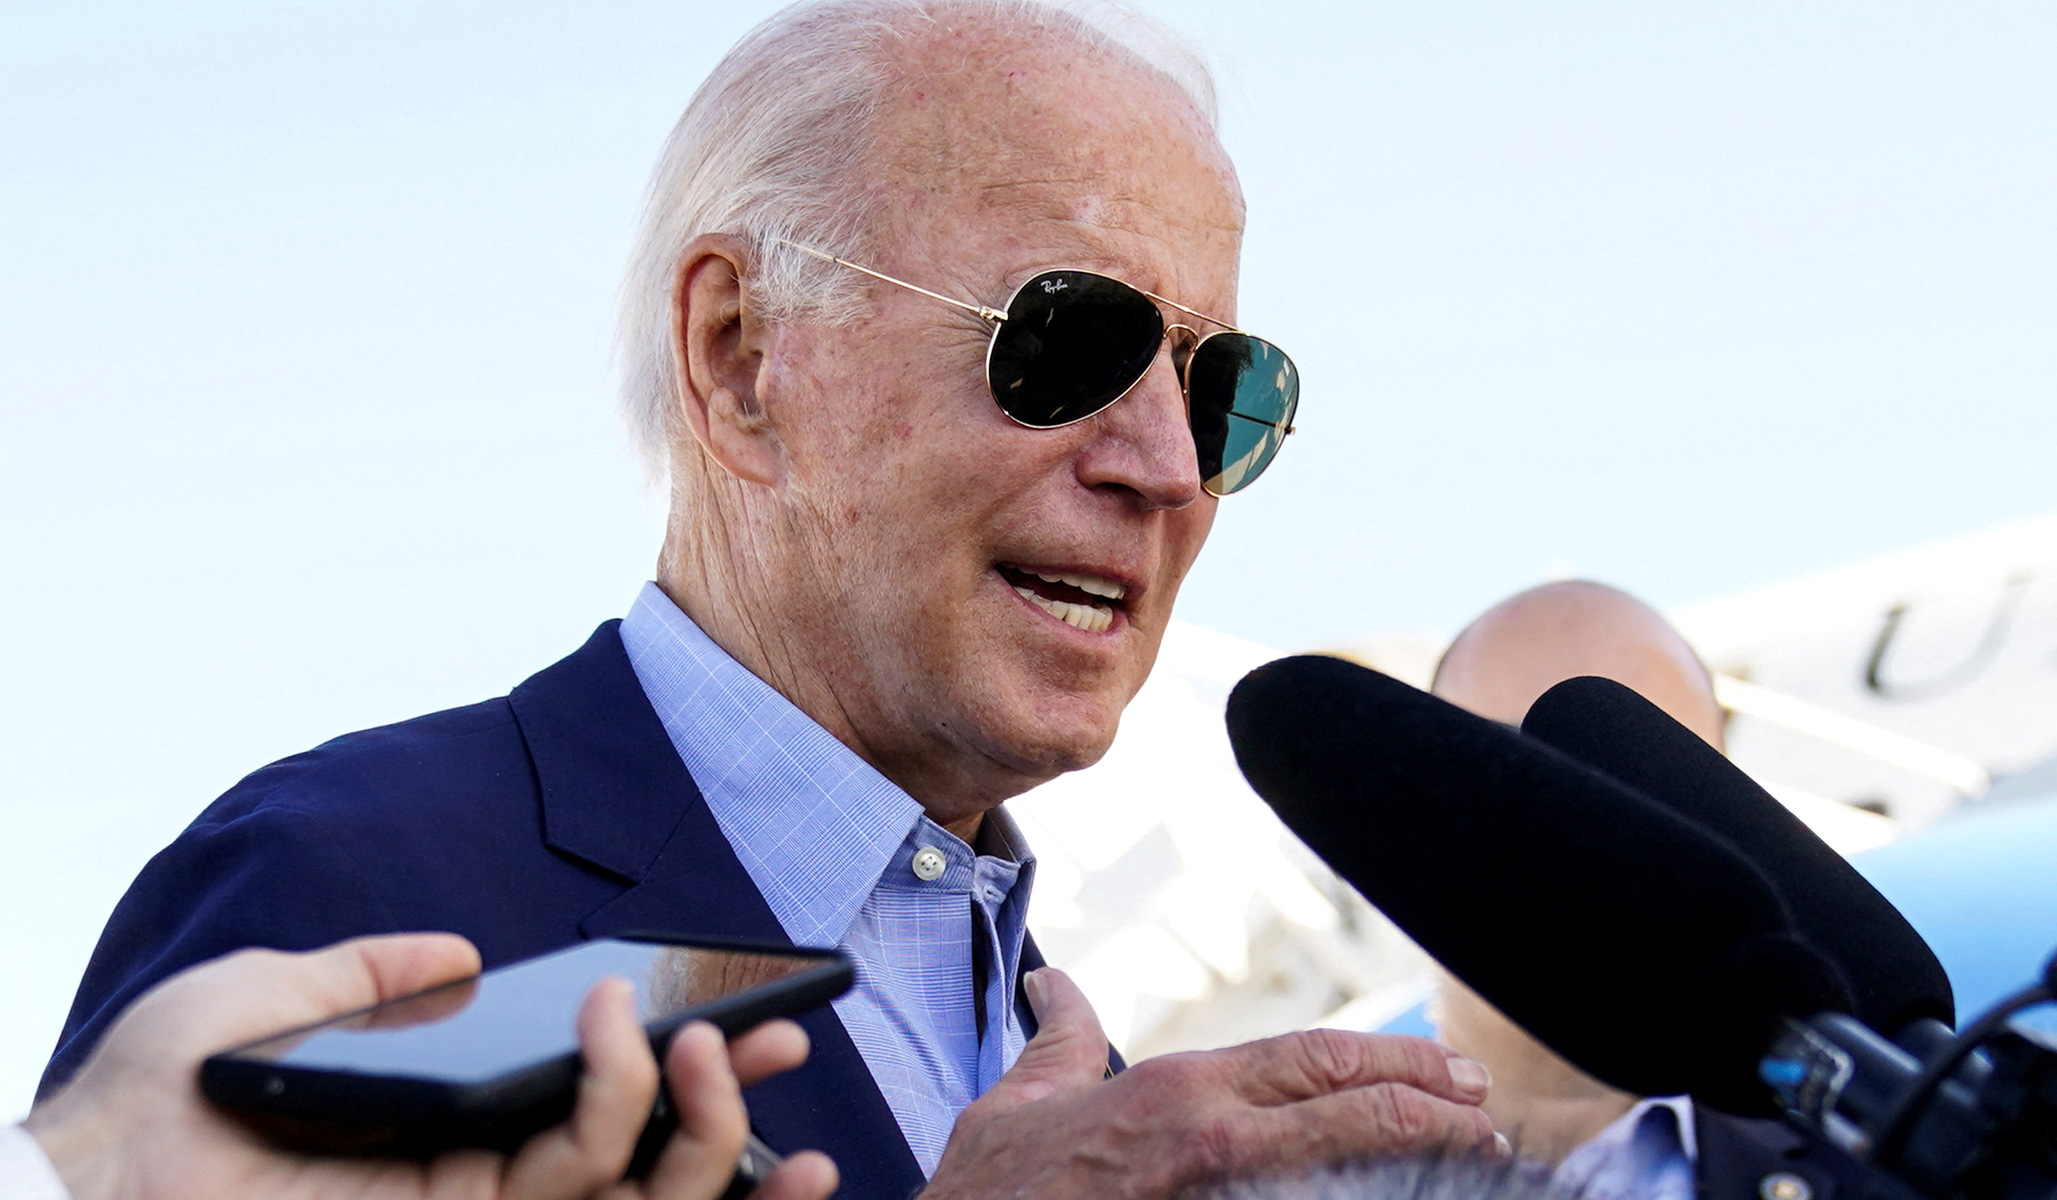 fusionere gennemførlig Før Joe Biden's Sunglasses: What's Up with His Shades? | National Review